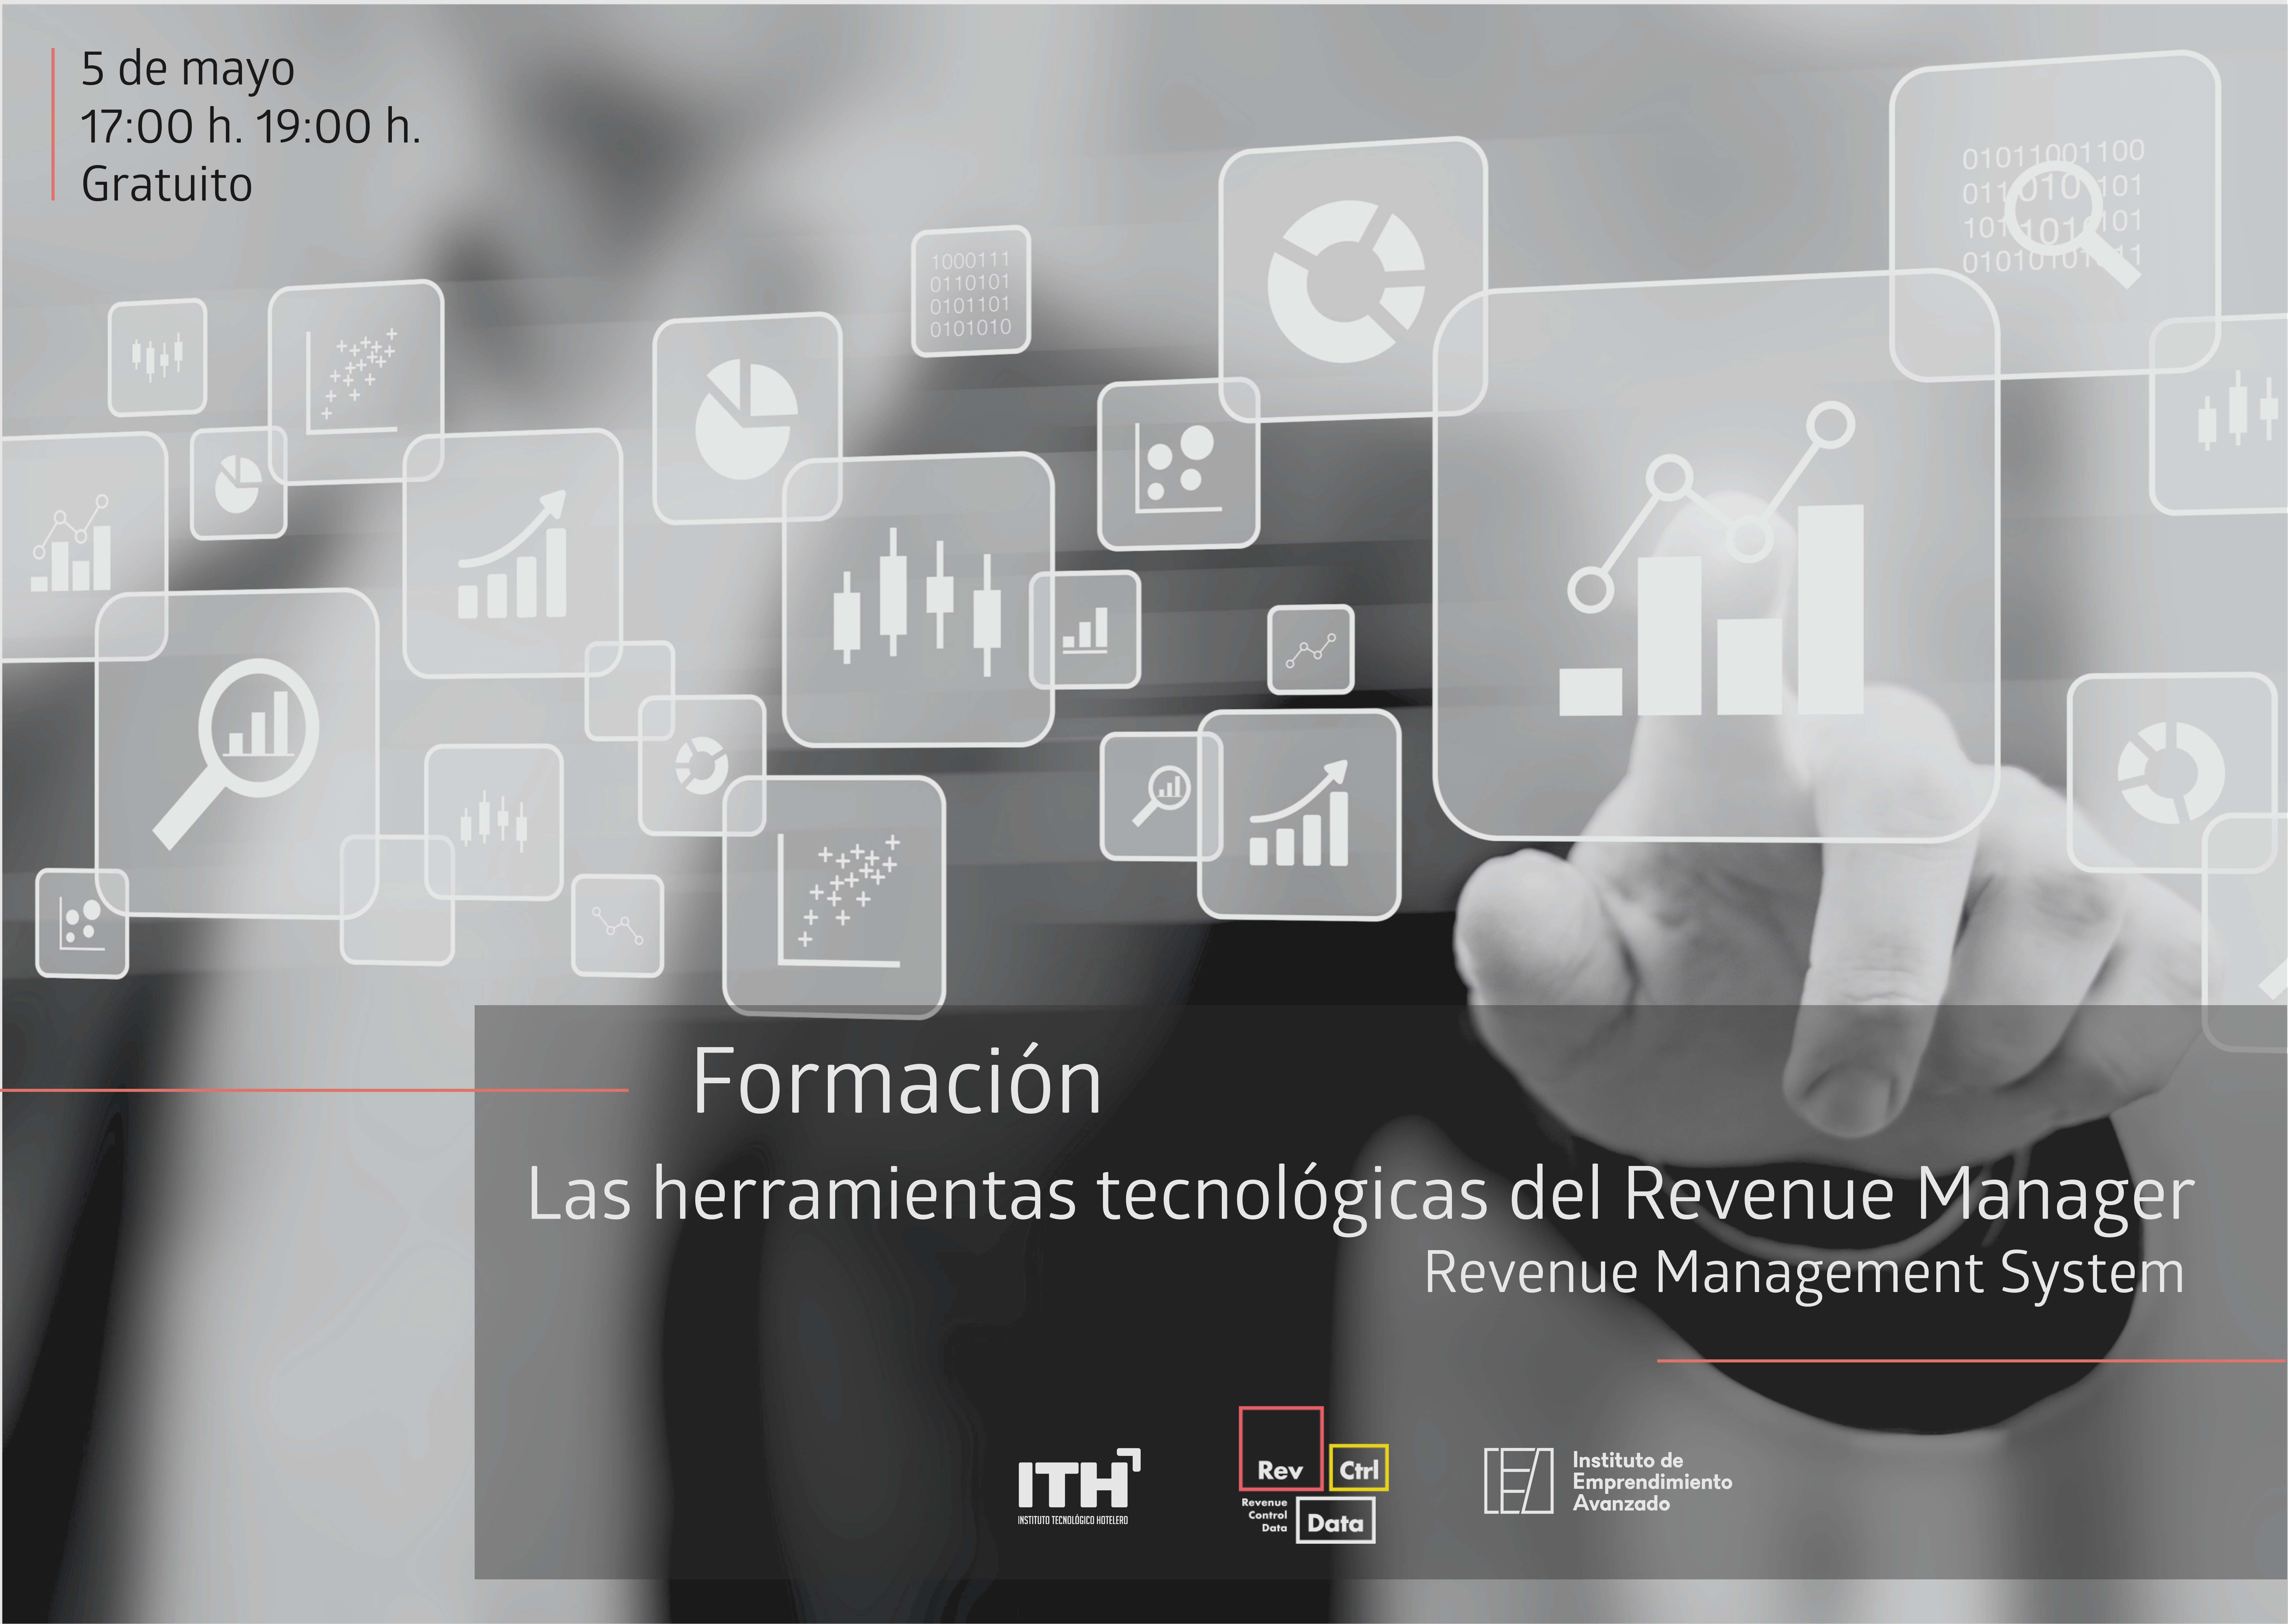 panel tecnoloogico formacion revenue manager